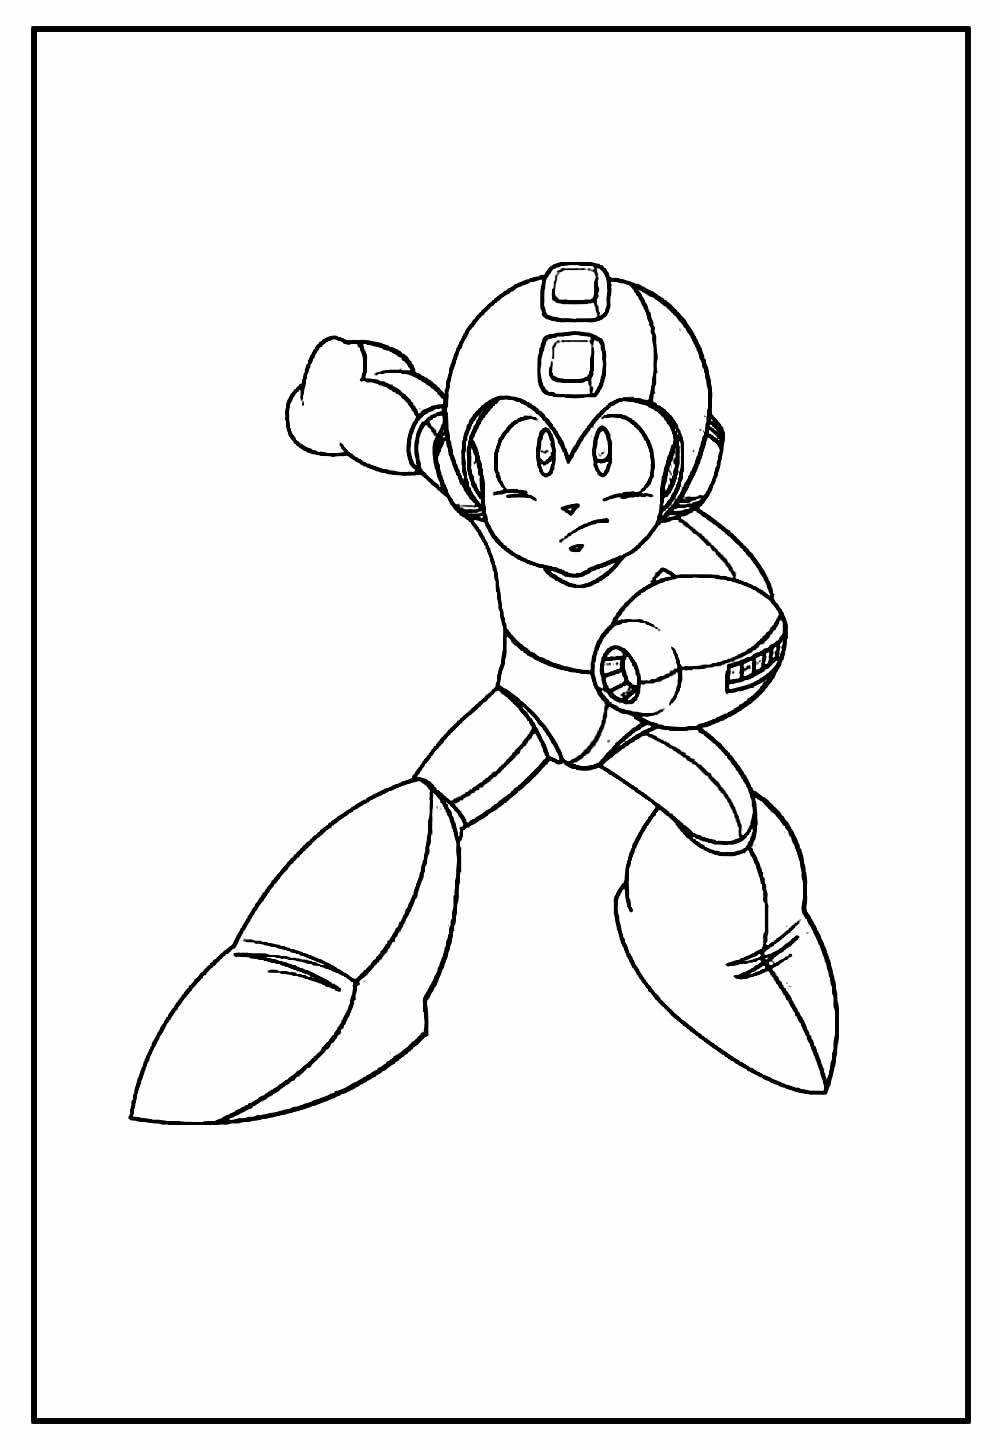 Desenho do Mega Man para pintar